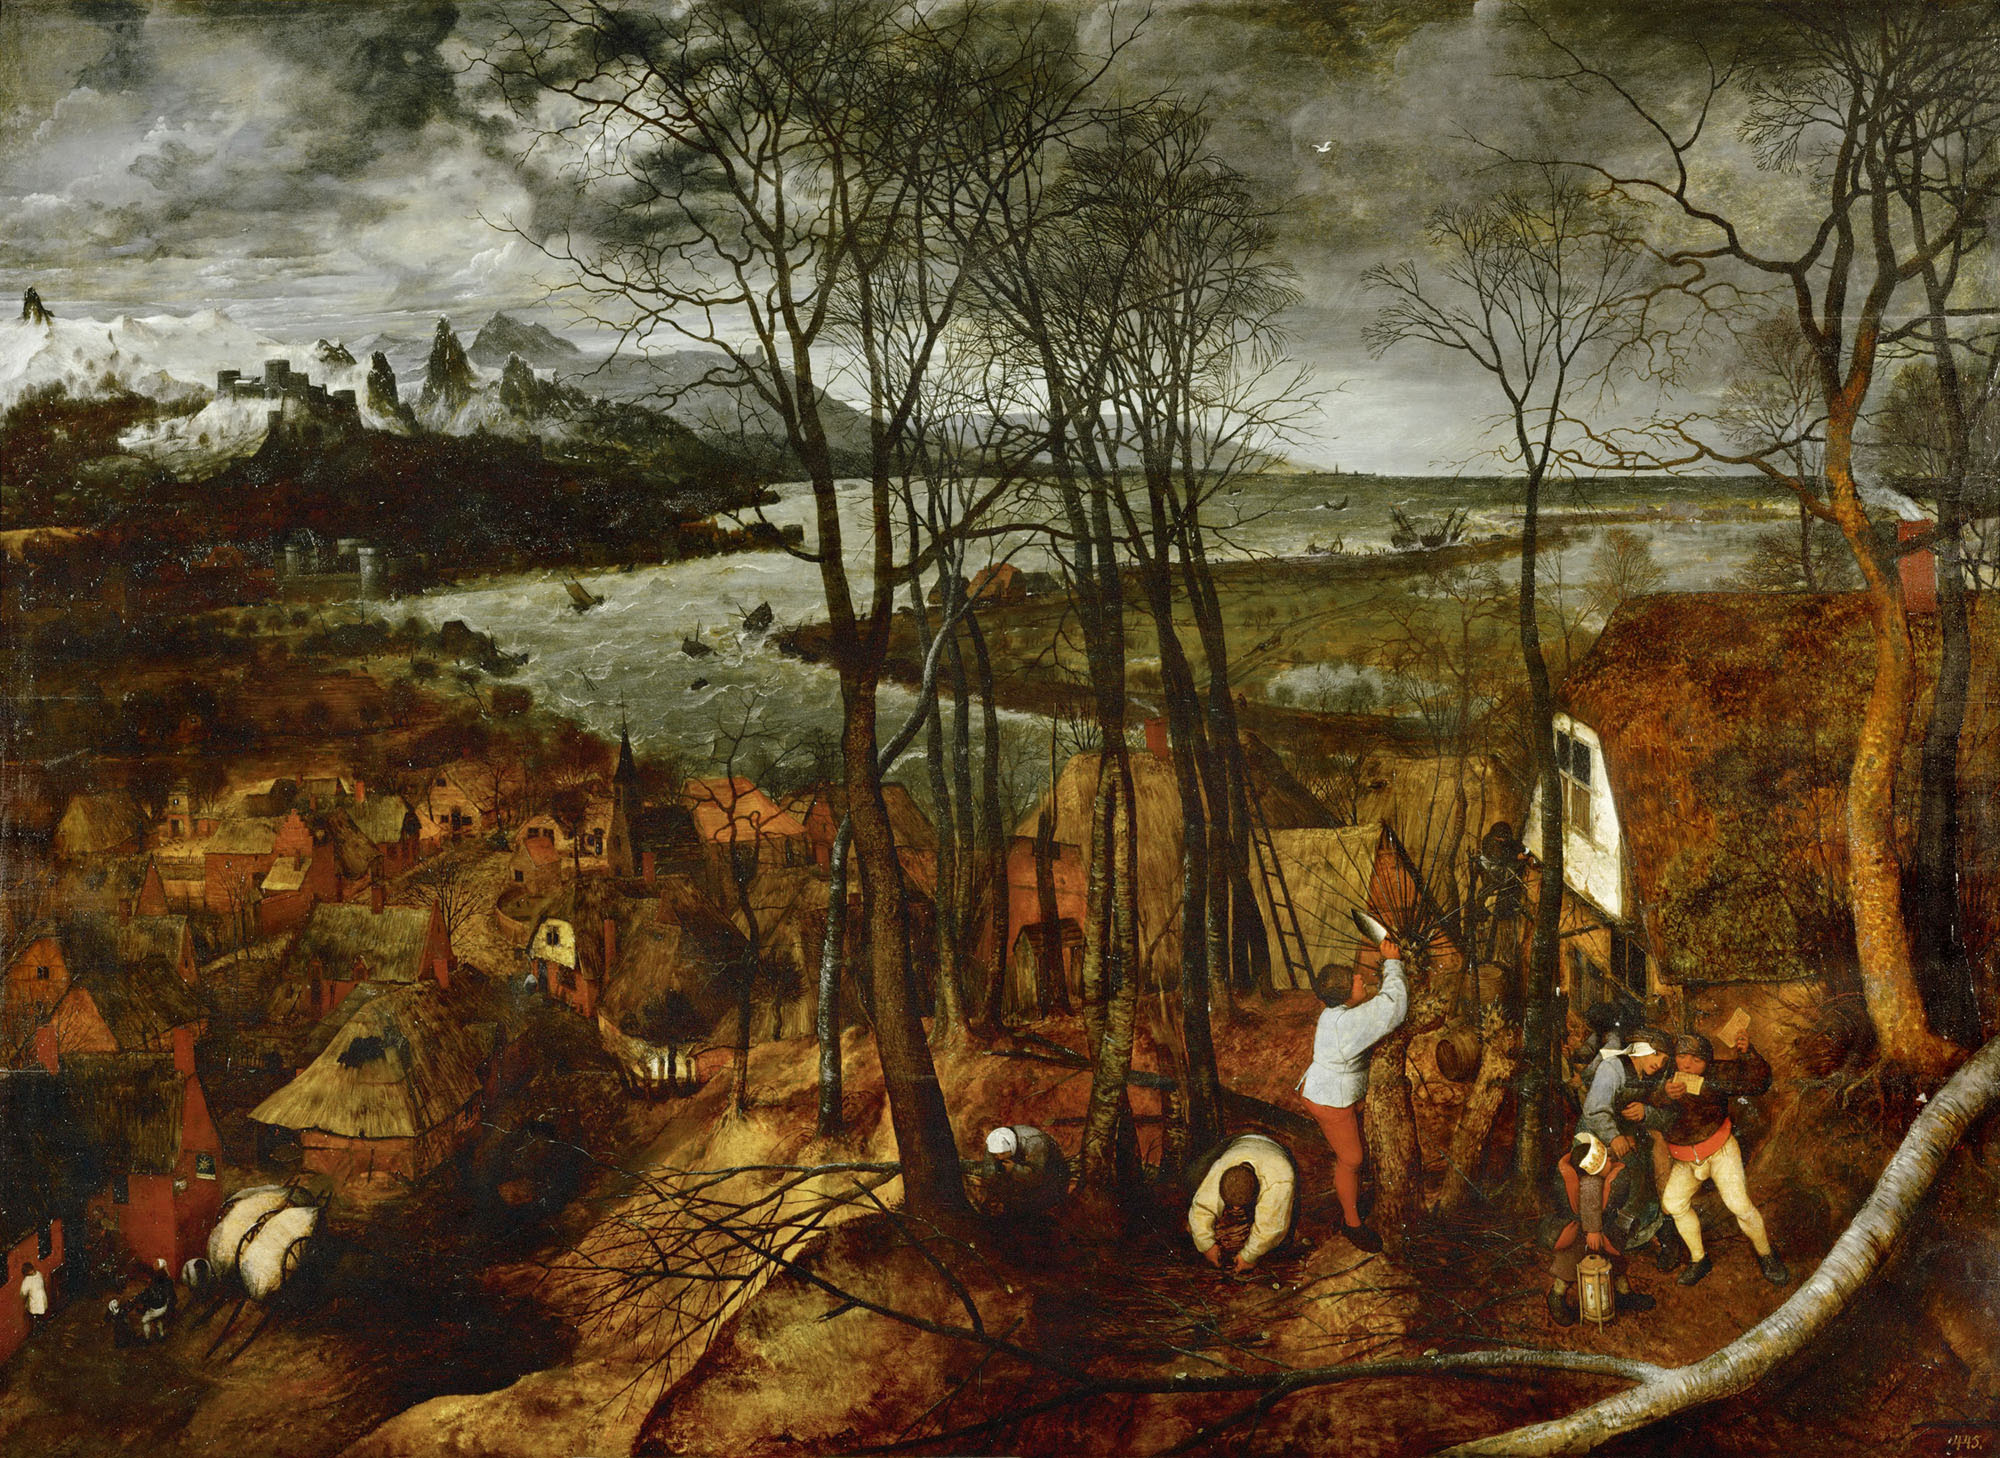 Питер Брейгель Старший. "Хмурый день (Февраль)". 1565.